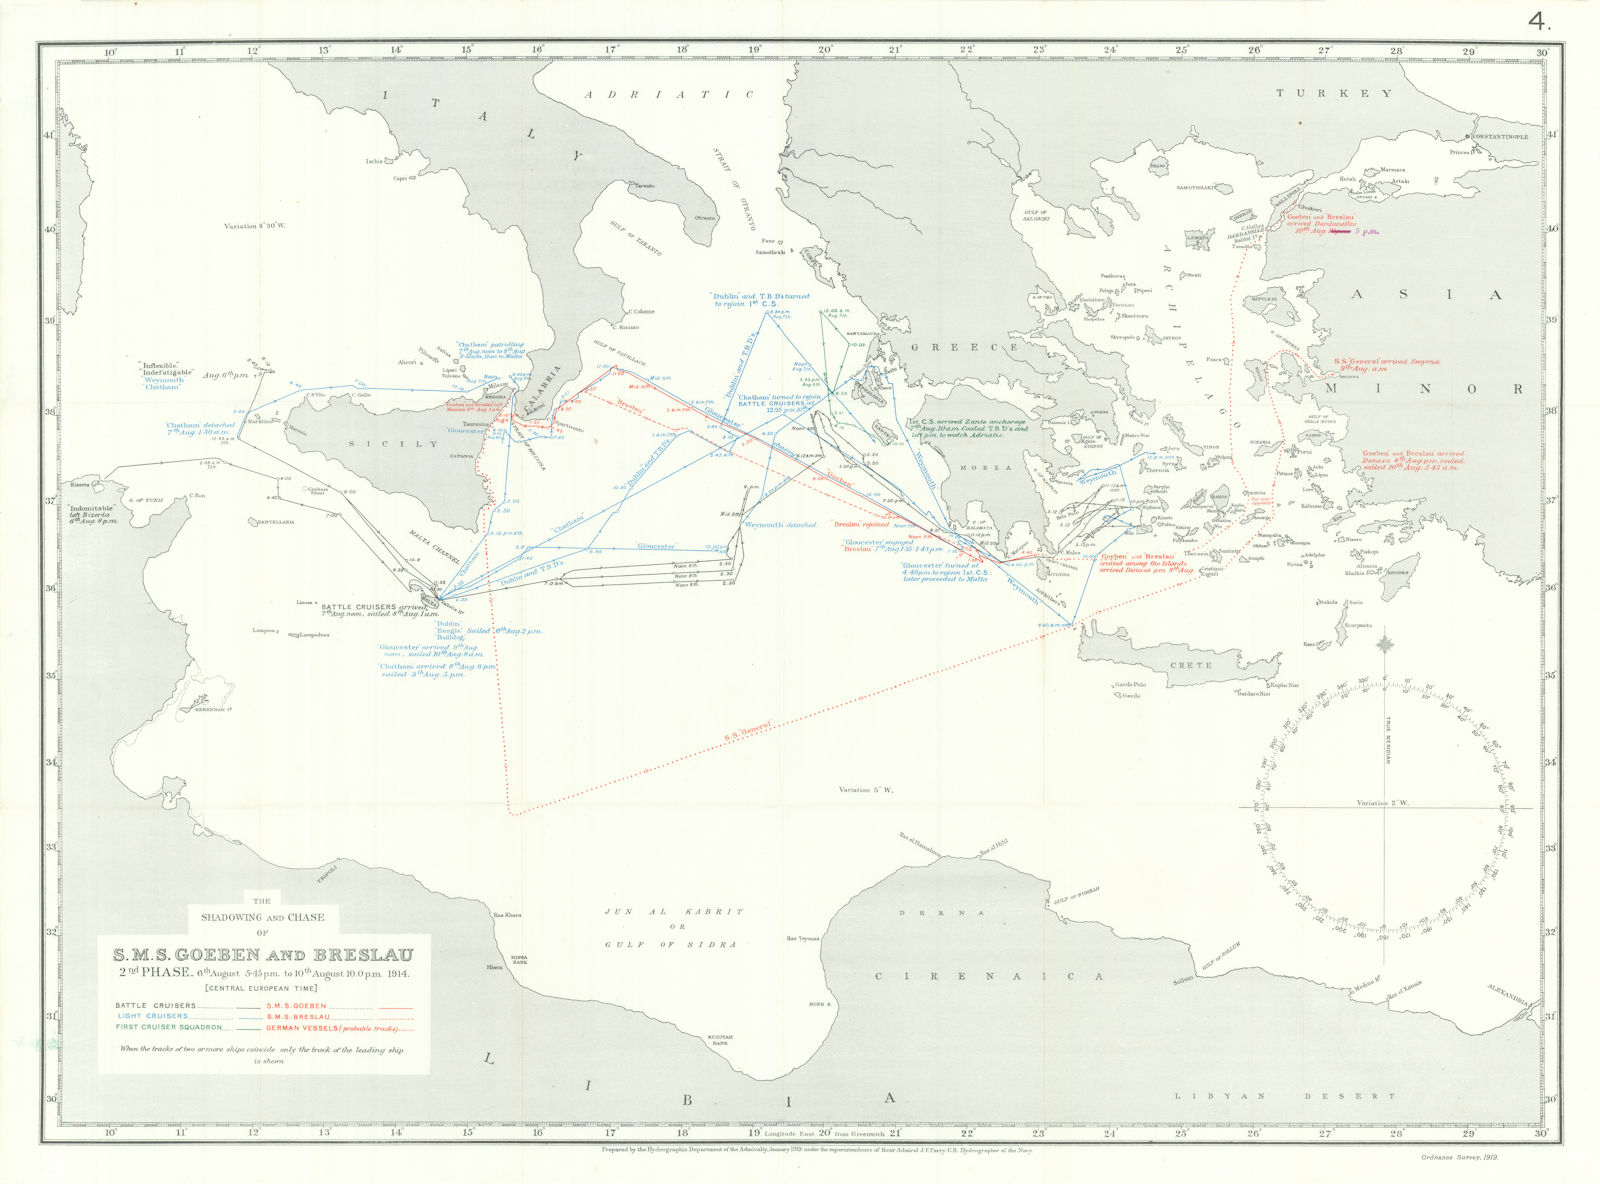 Pursuit of SMS Goeben & Breslau. 6-10th August 1914. First World War. 1920 map